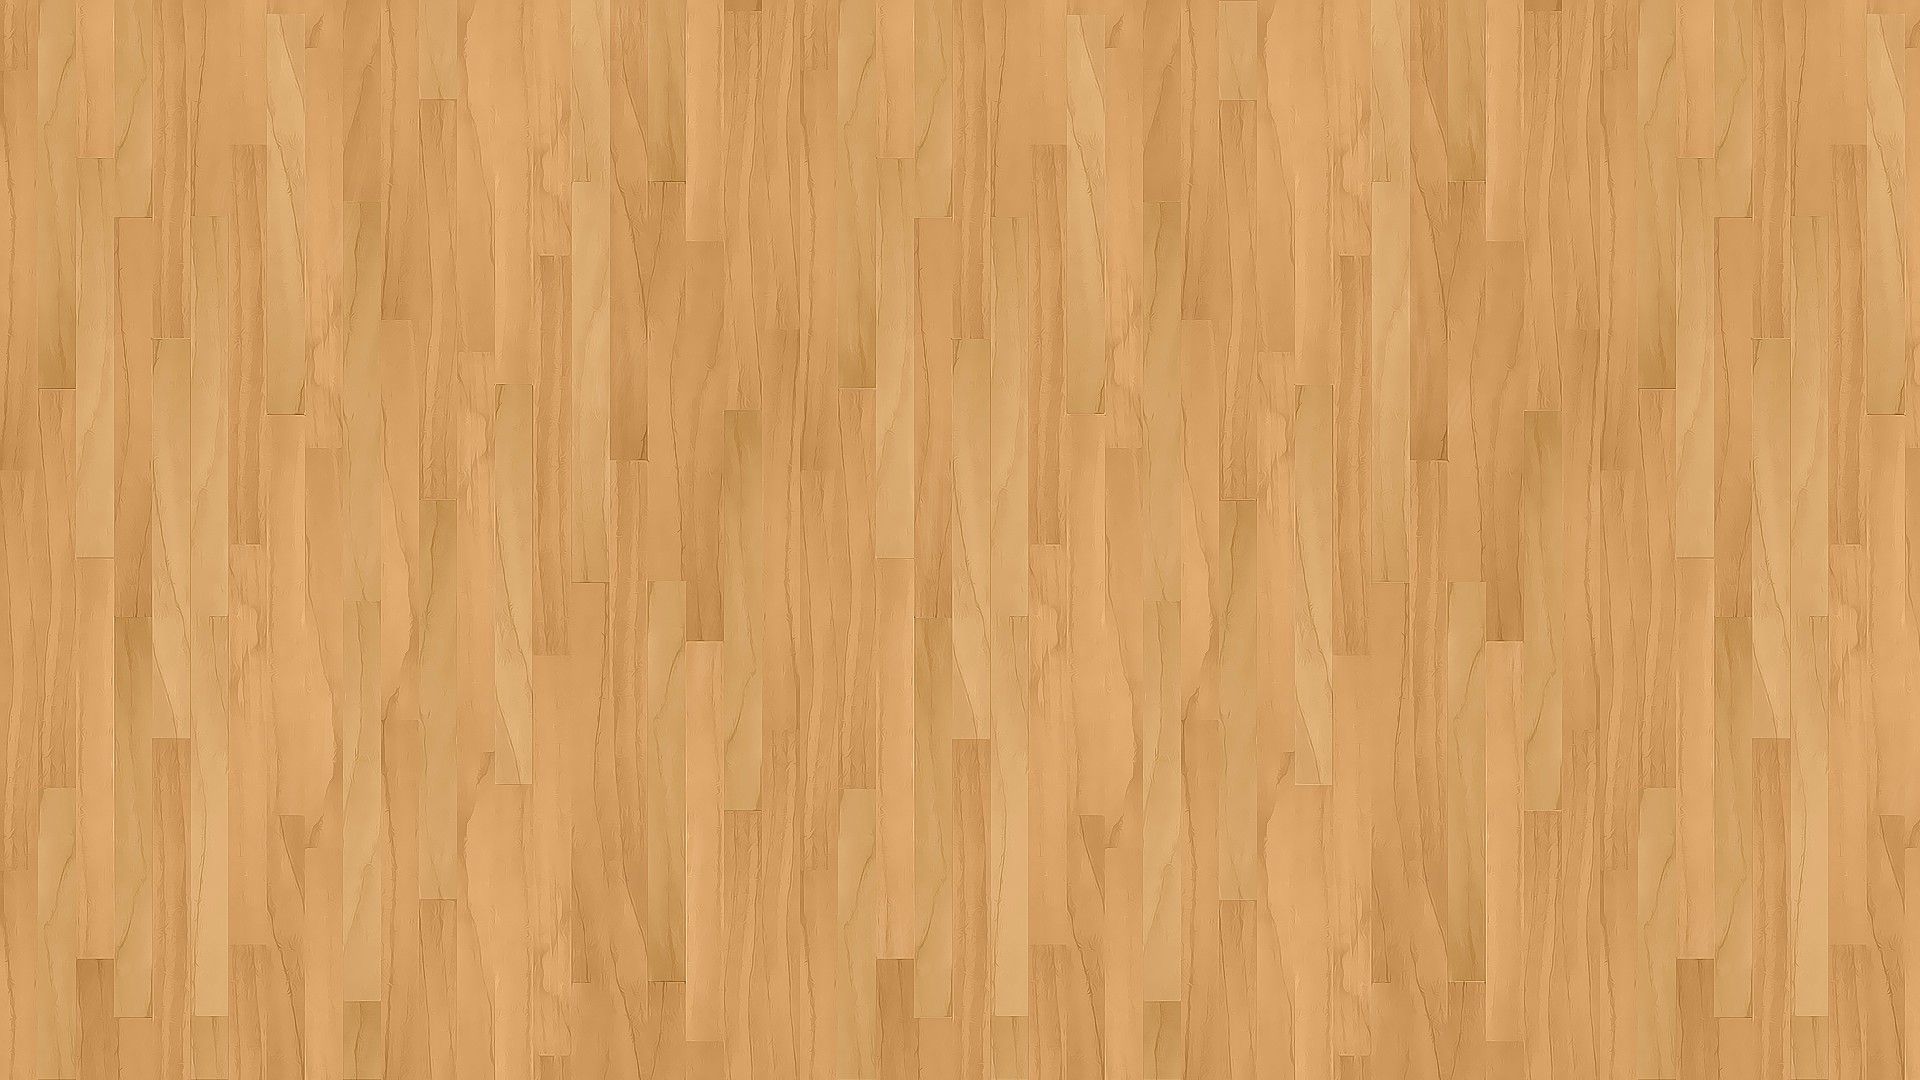 Wood Grain Backgrounds 3.